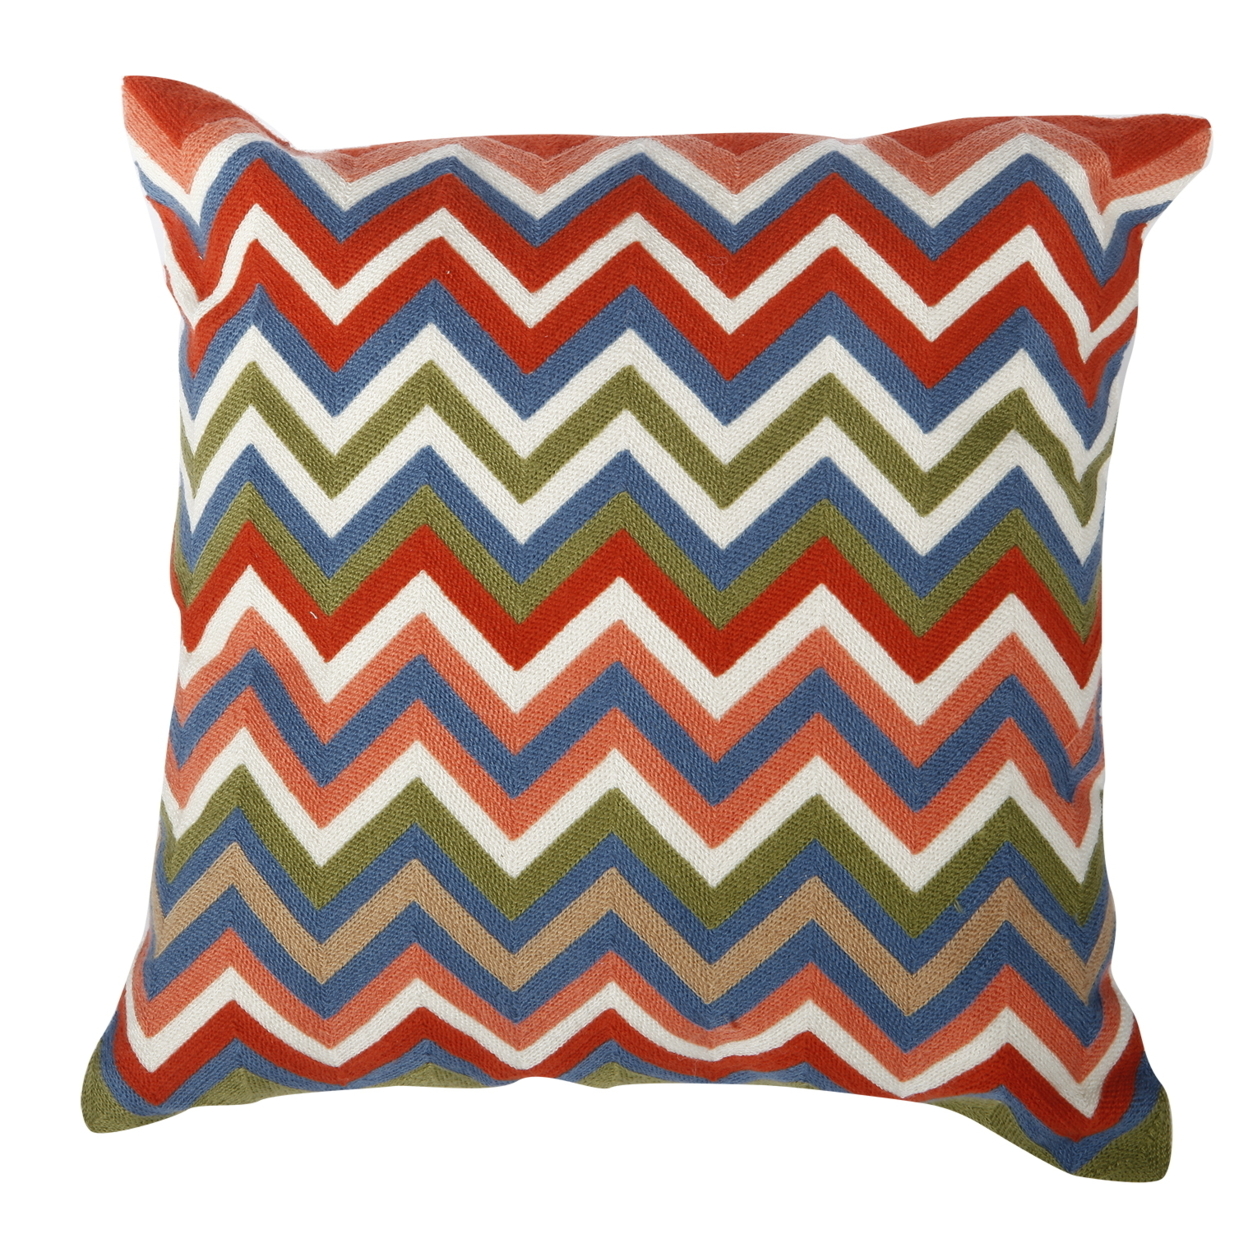 18 X 18 Inch Cotton Pillow With Chevron Embroidery, Set Of 2, Multicolor- Saltoro Sherpi